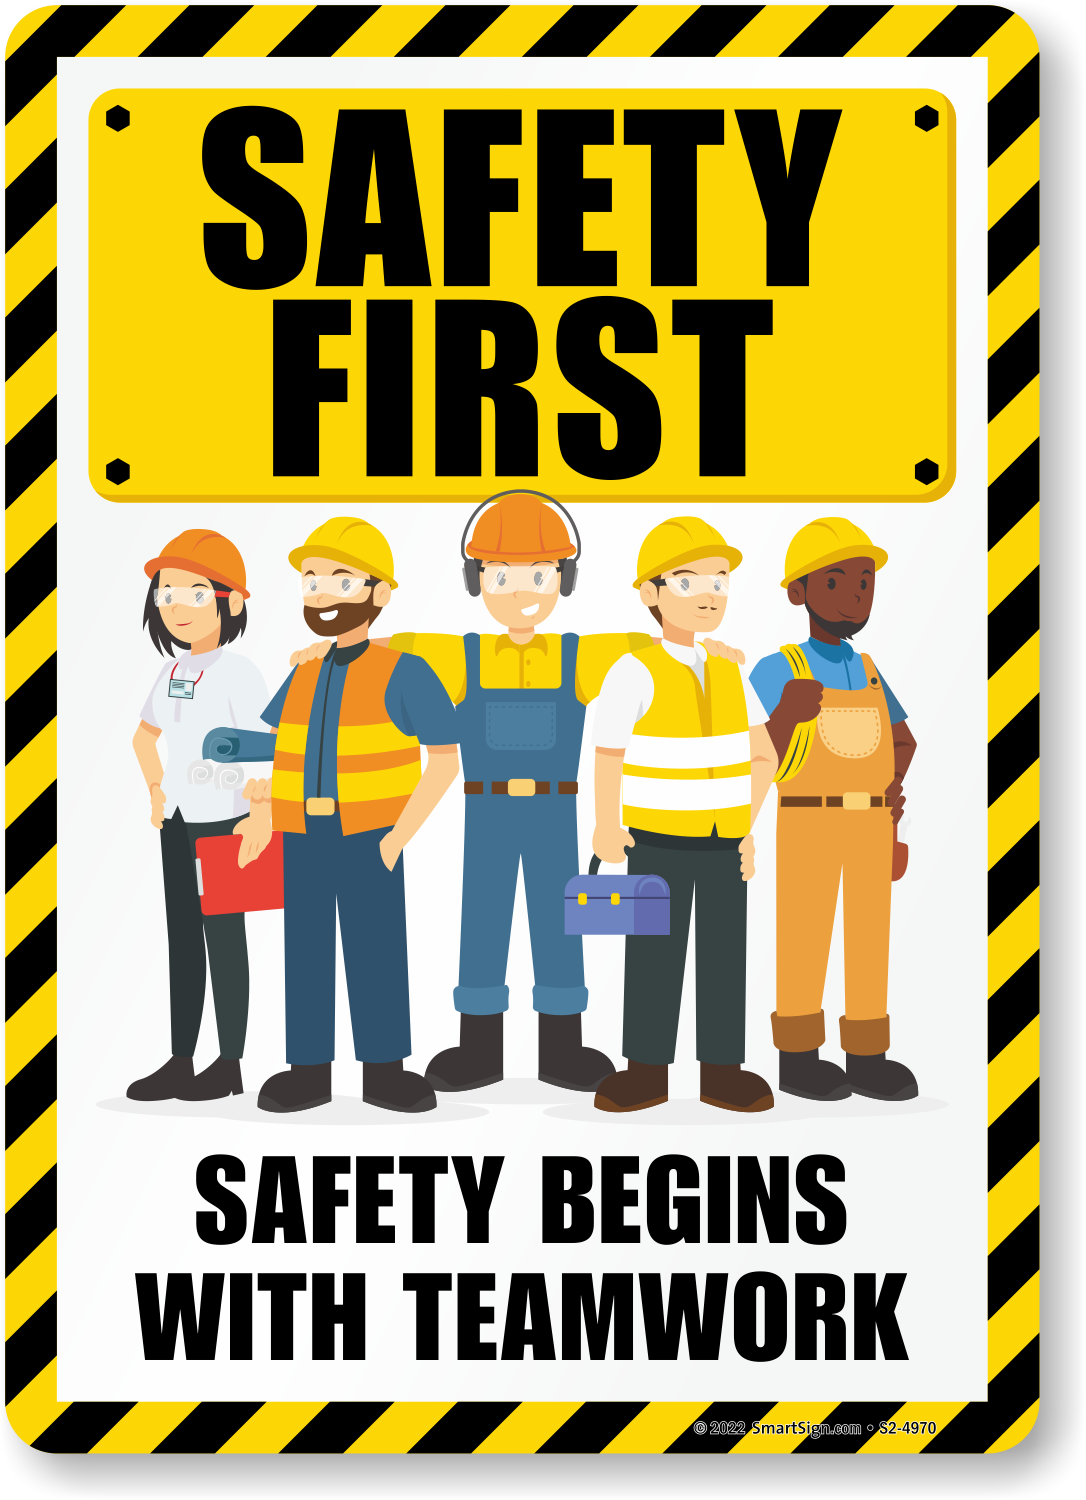 Safety First Safety Begins with Teamwork Sign, SKU: S2-4970